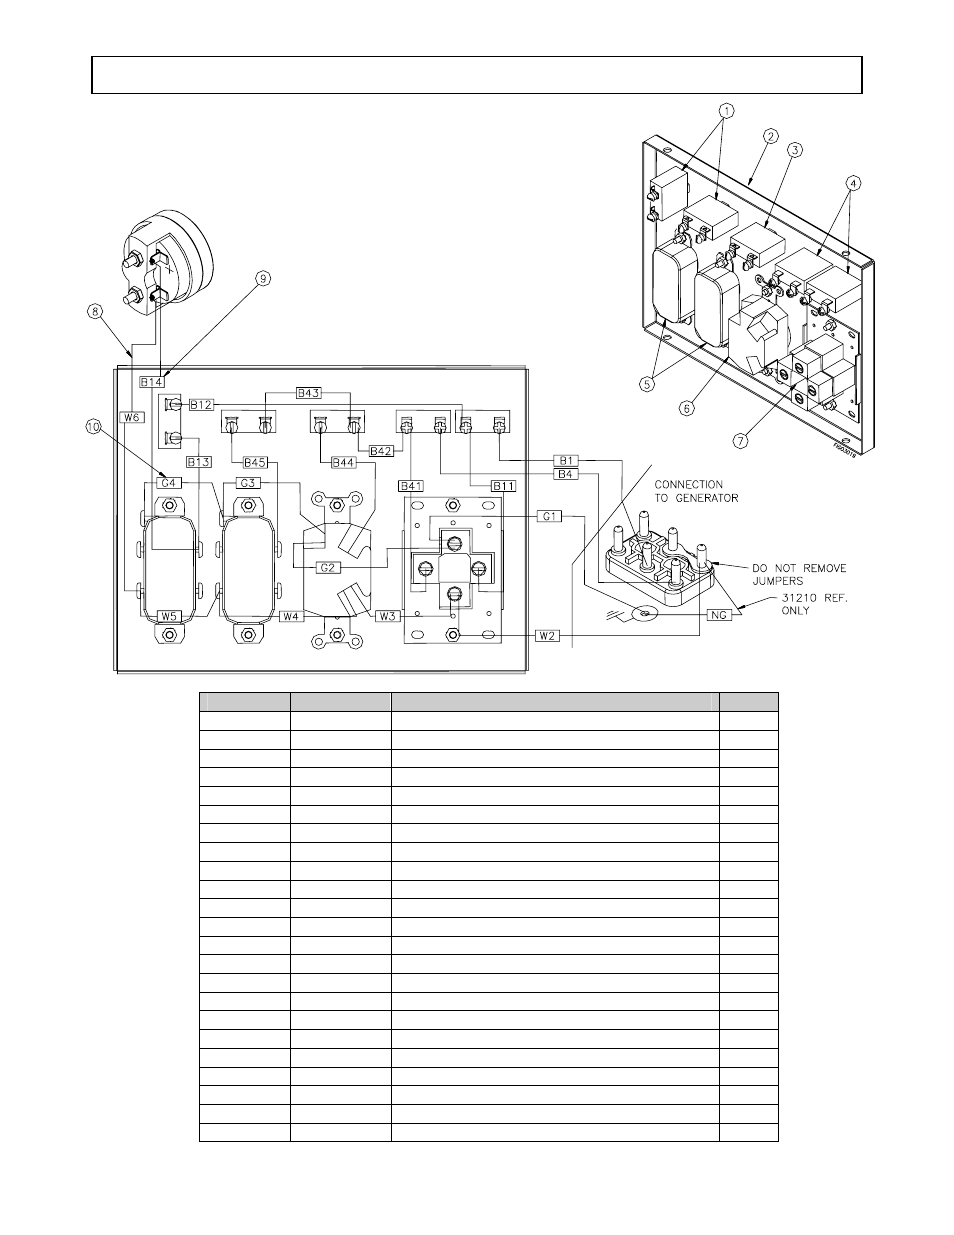 Wiring diagram, Wiring diagram – rev g | Northern Industrial Tools 10000 BDG User Manual | Page 43 / 46